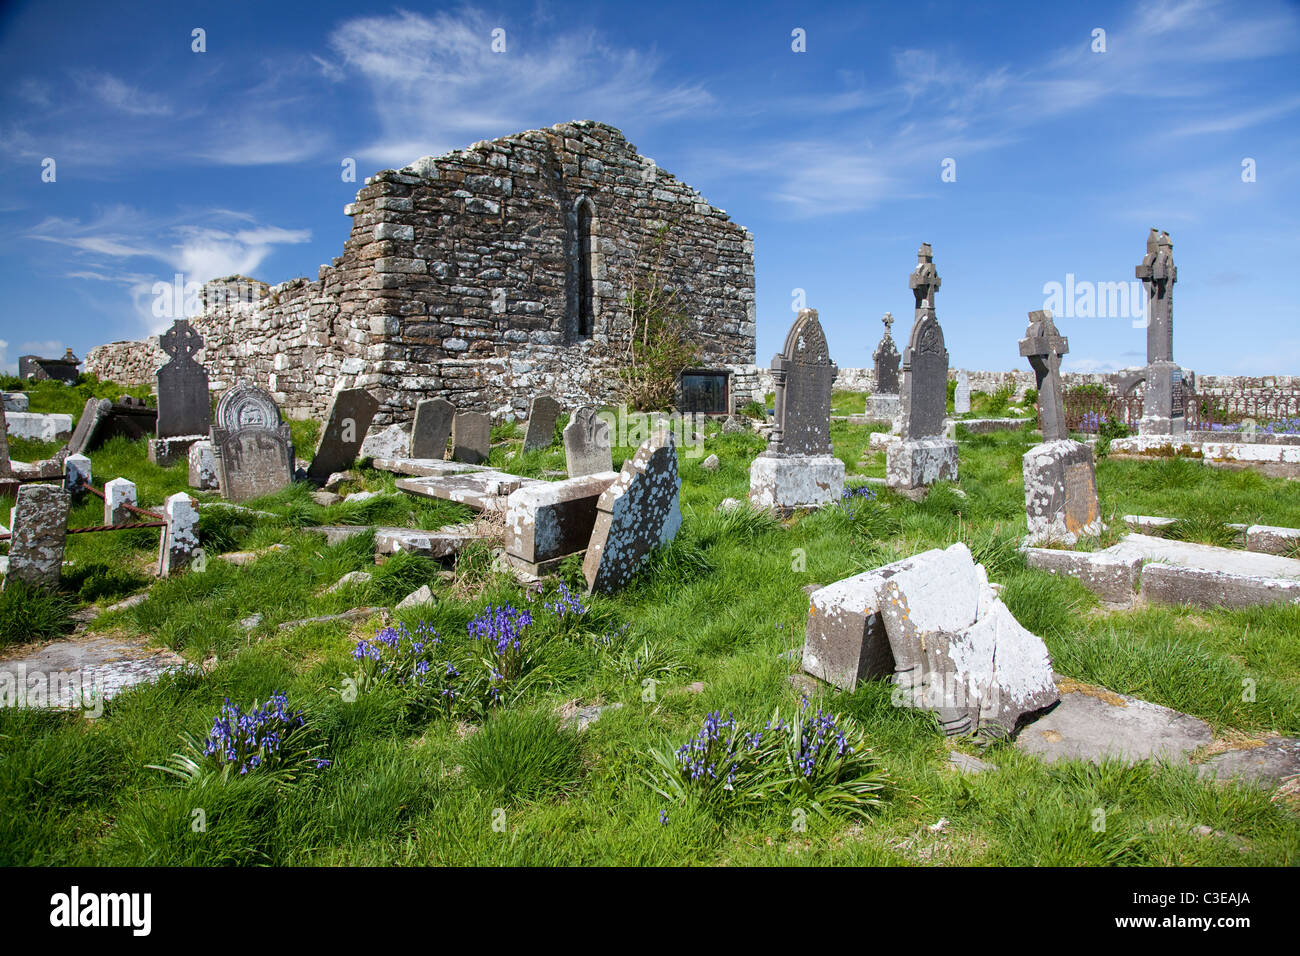 Old church and graveyard, Aughris, County Sligo, Ireland. Stock Photo